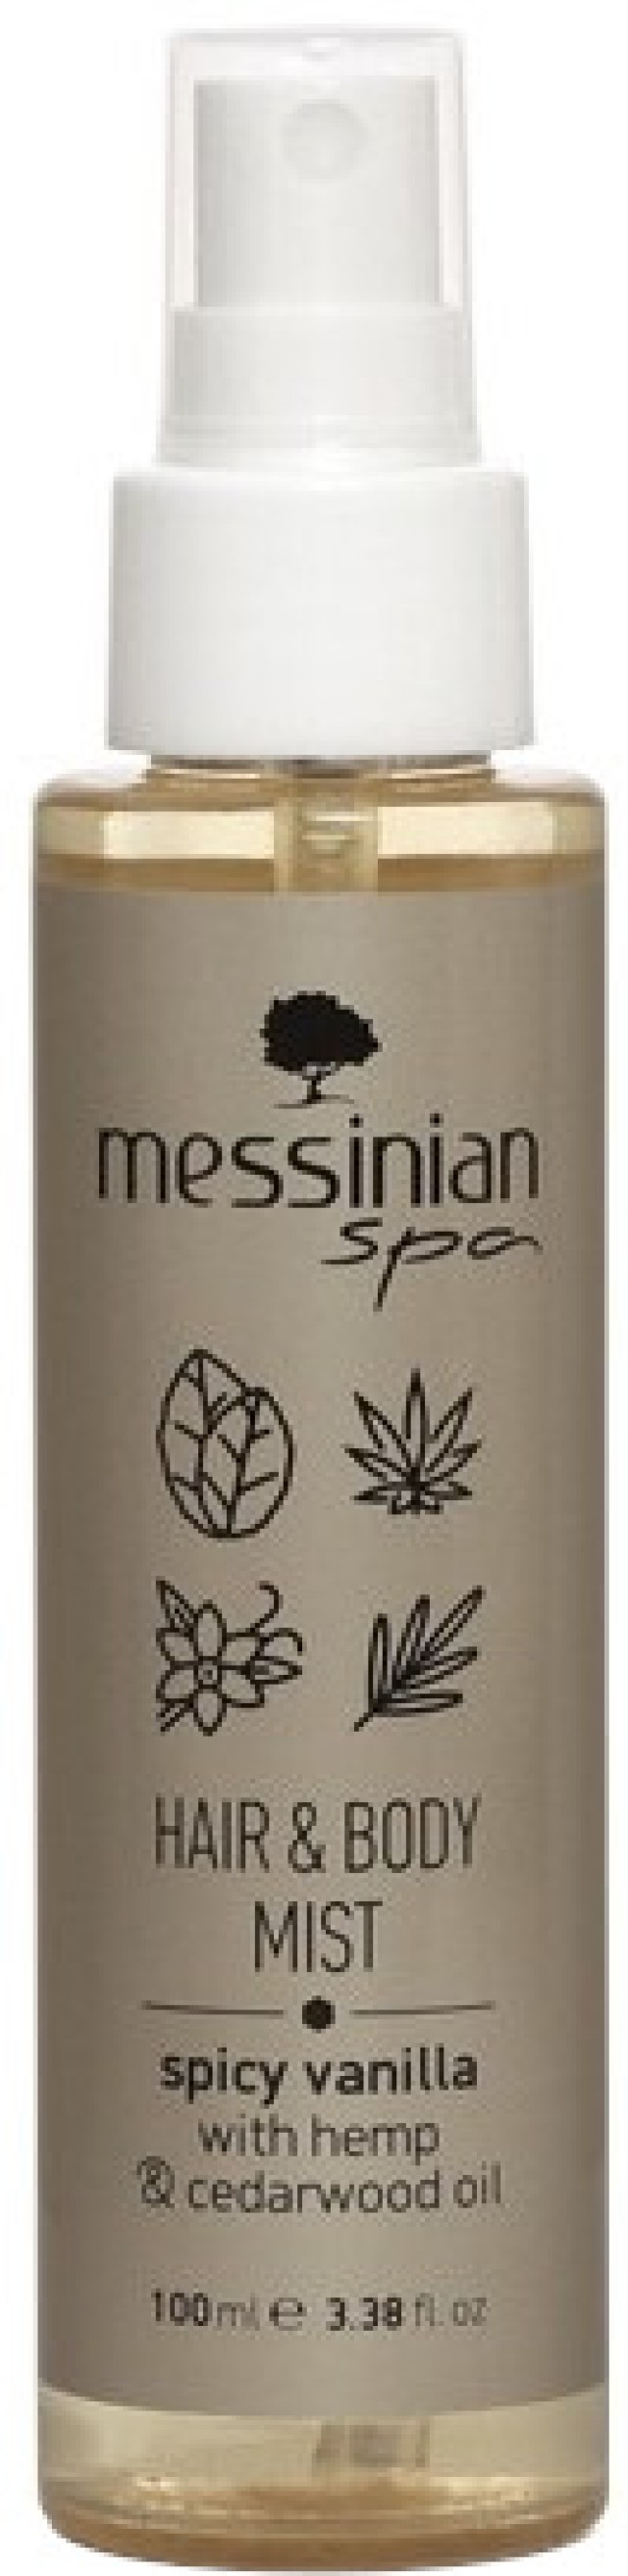 Messinian Hair & Body Mist Spa Spicy Vanilla 100ml